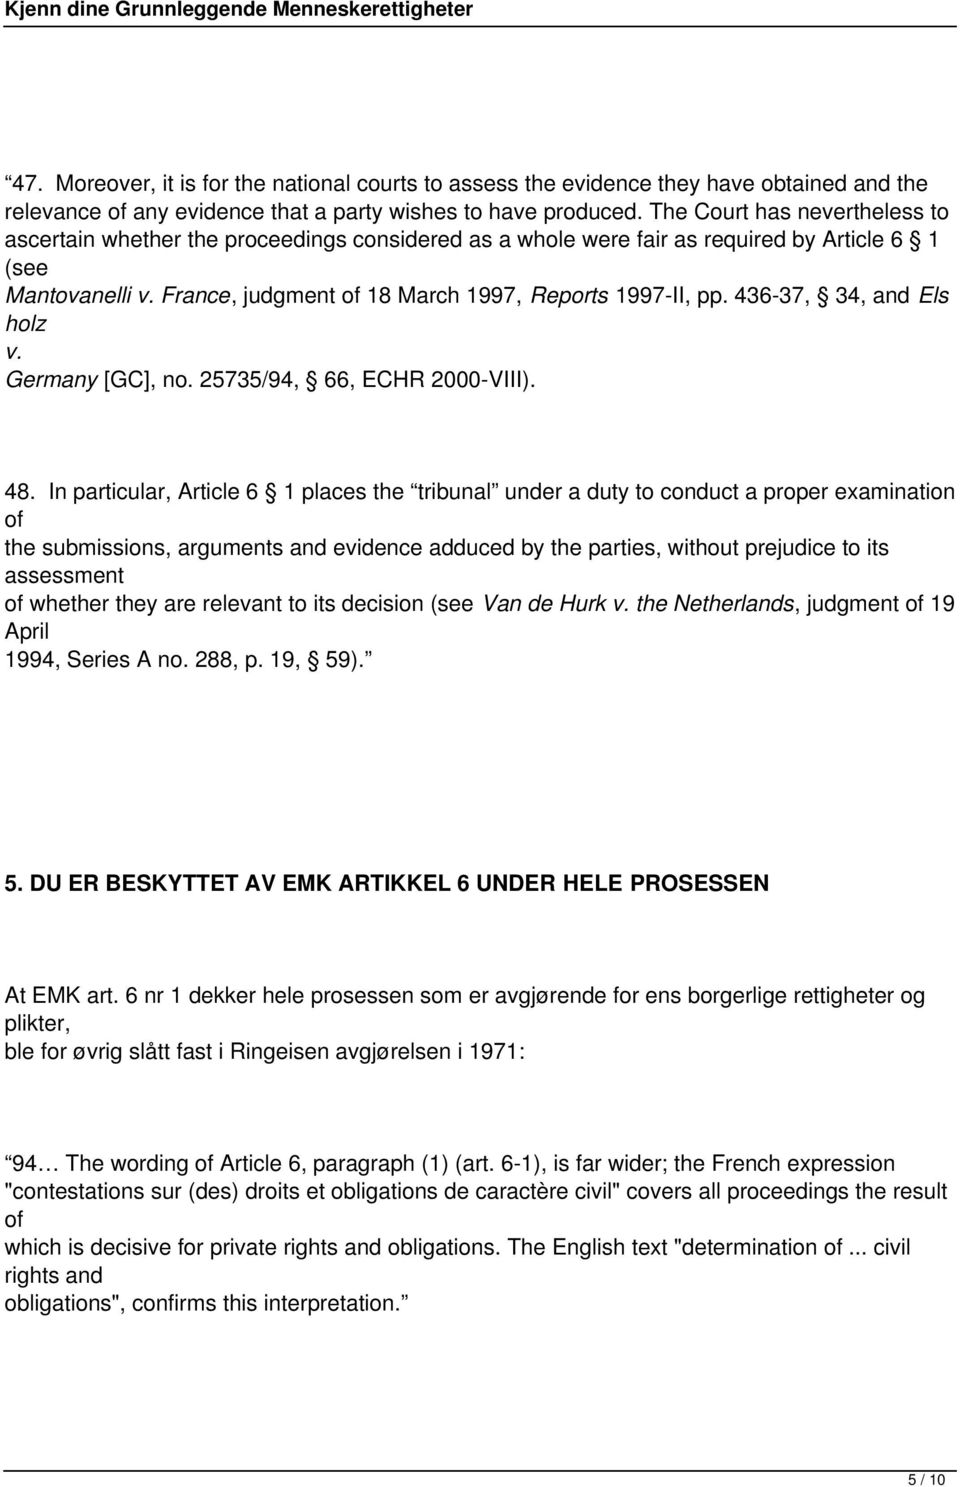 436-37, 34, and Els holz v. Germany [GC], no. 25735/94, 66, ECHR 2000-VIII). 48.